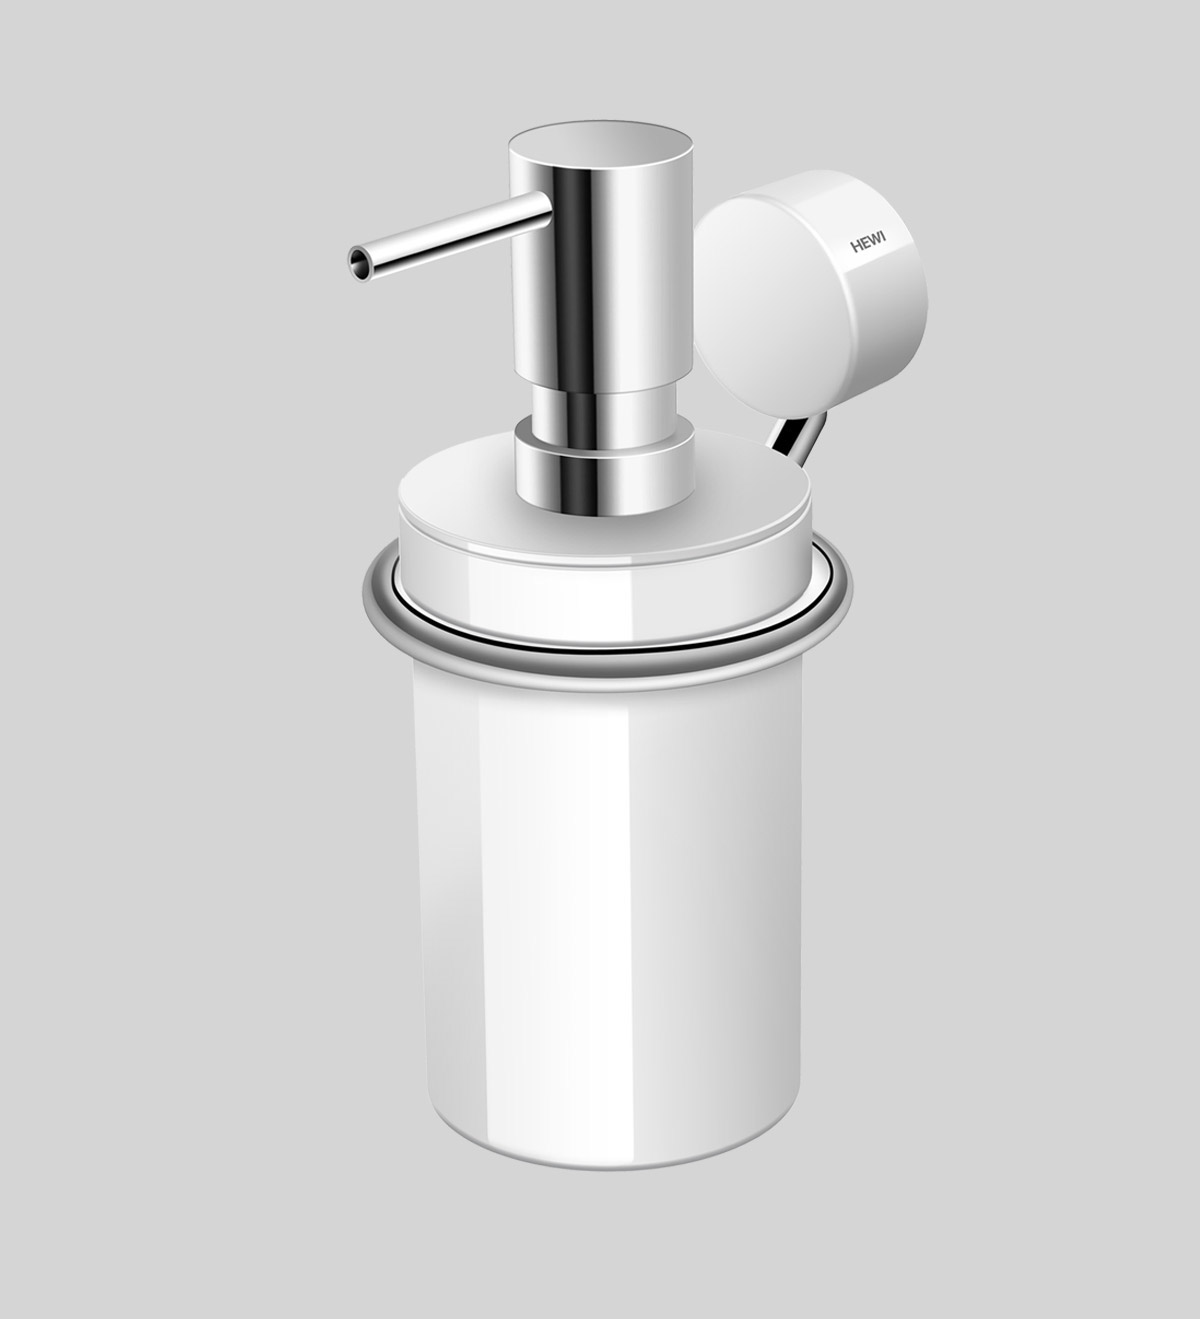 design bath sanitary accessories Interior